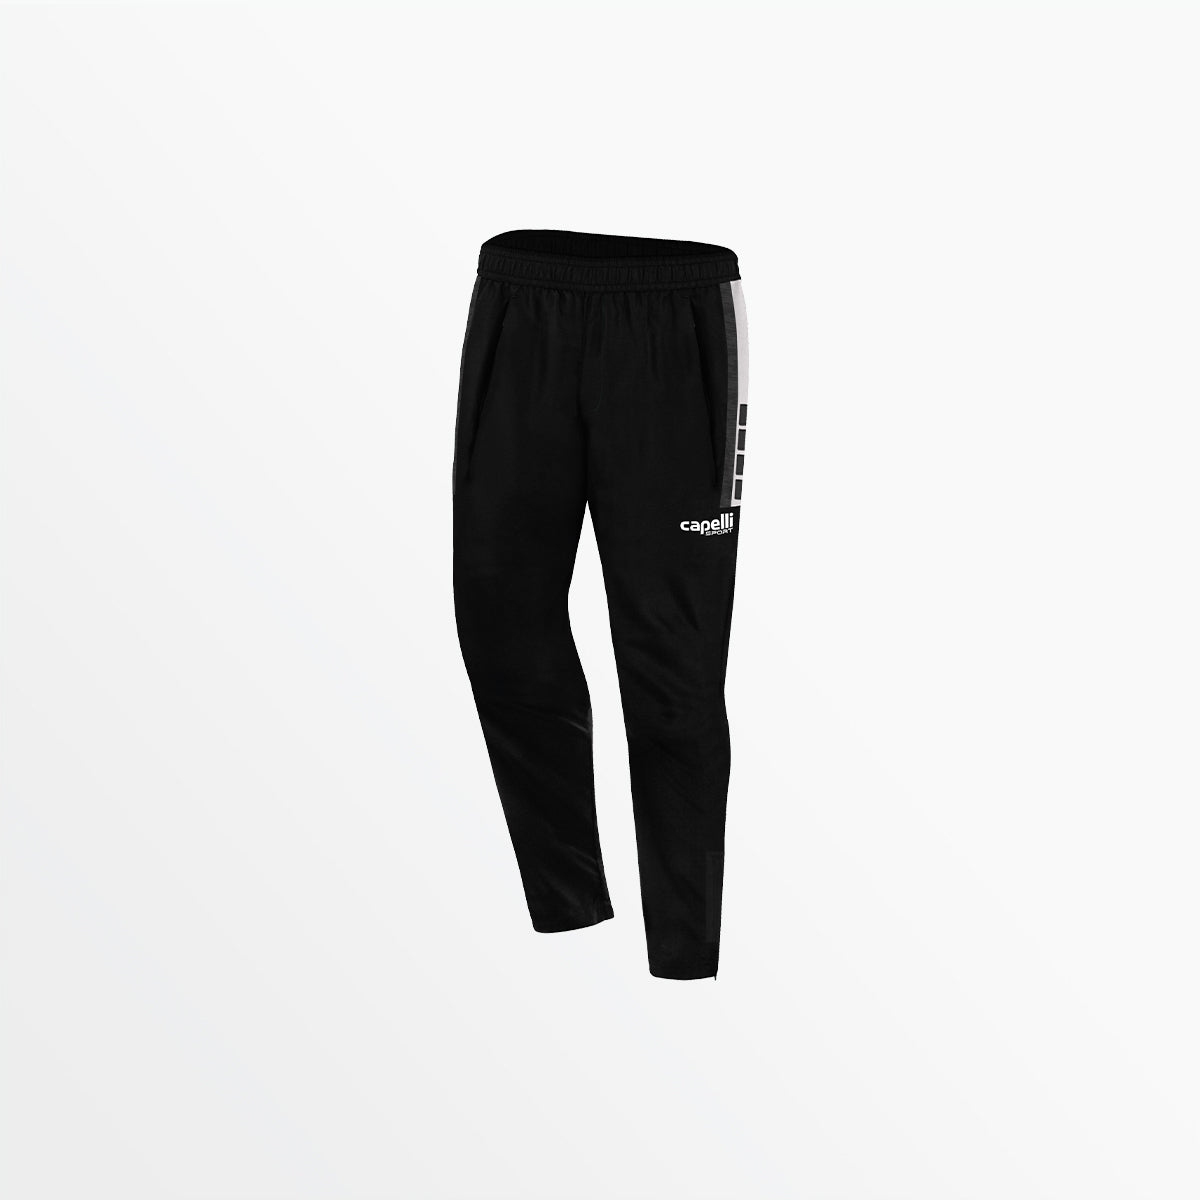 Reebok Boys Athletic Cross Training Pants, Sizes 4-18 - Walmart.com